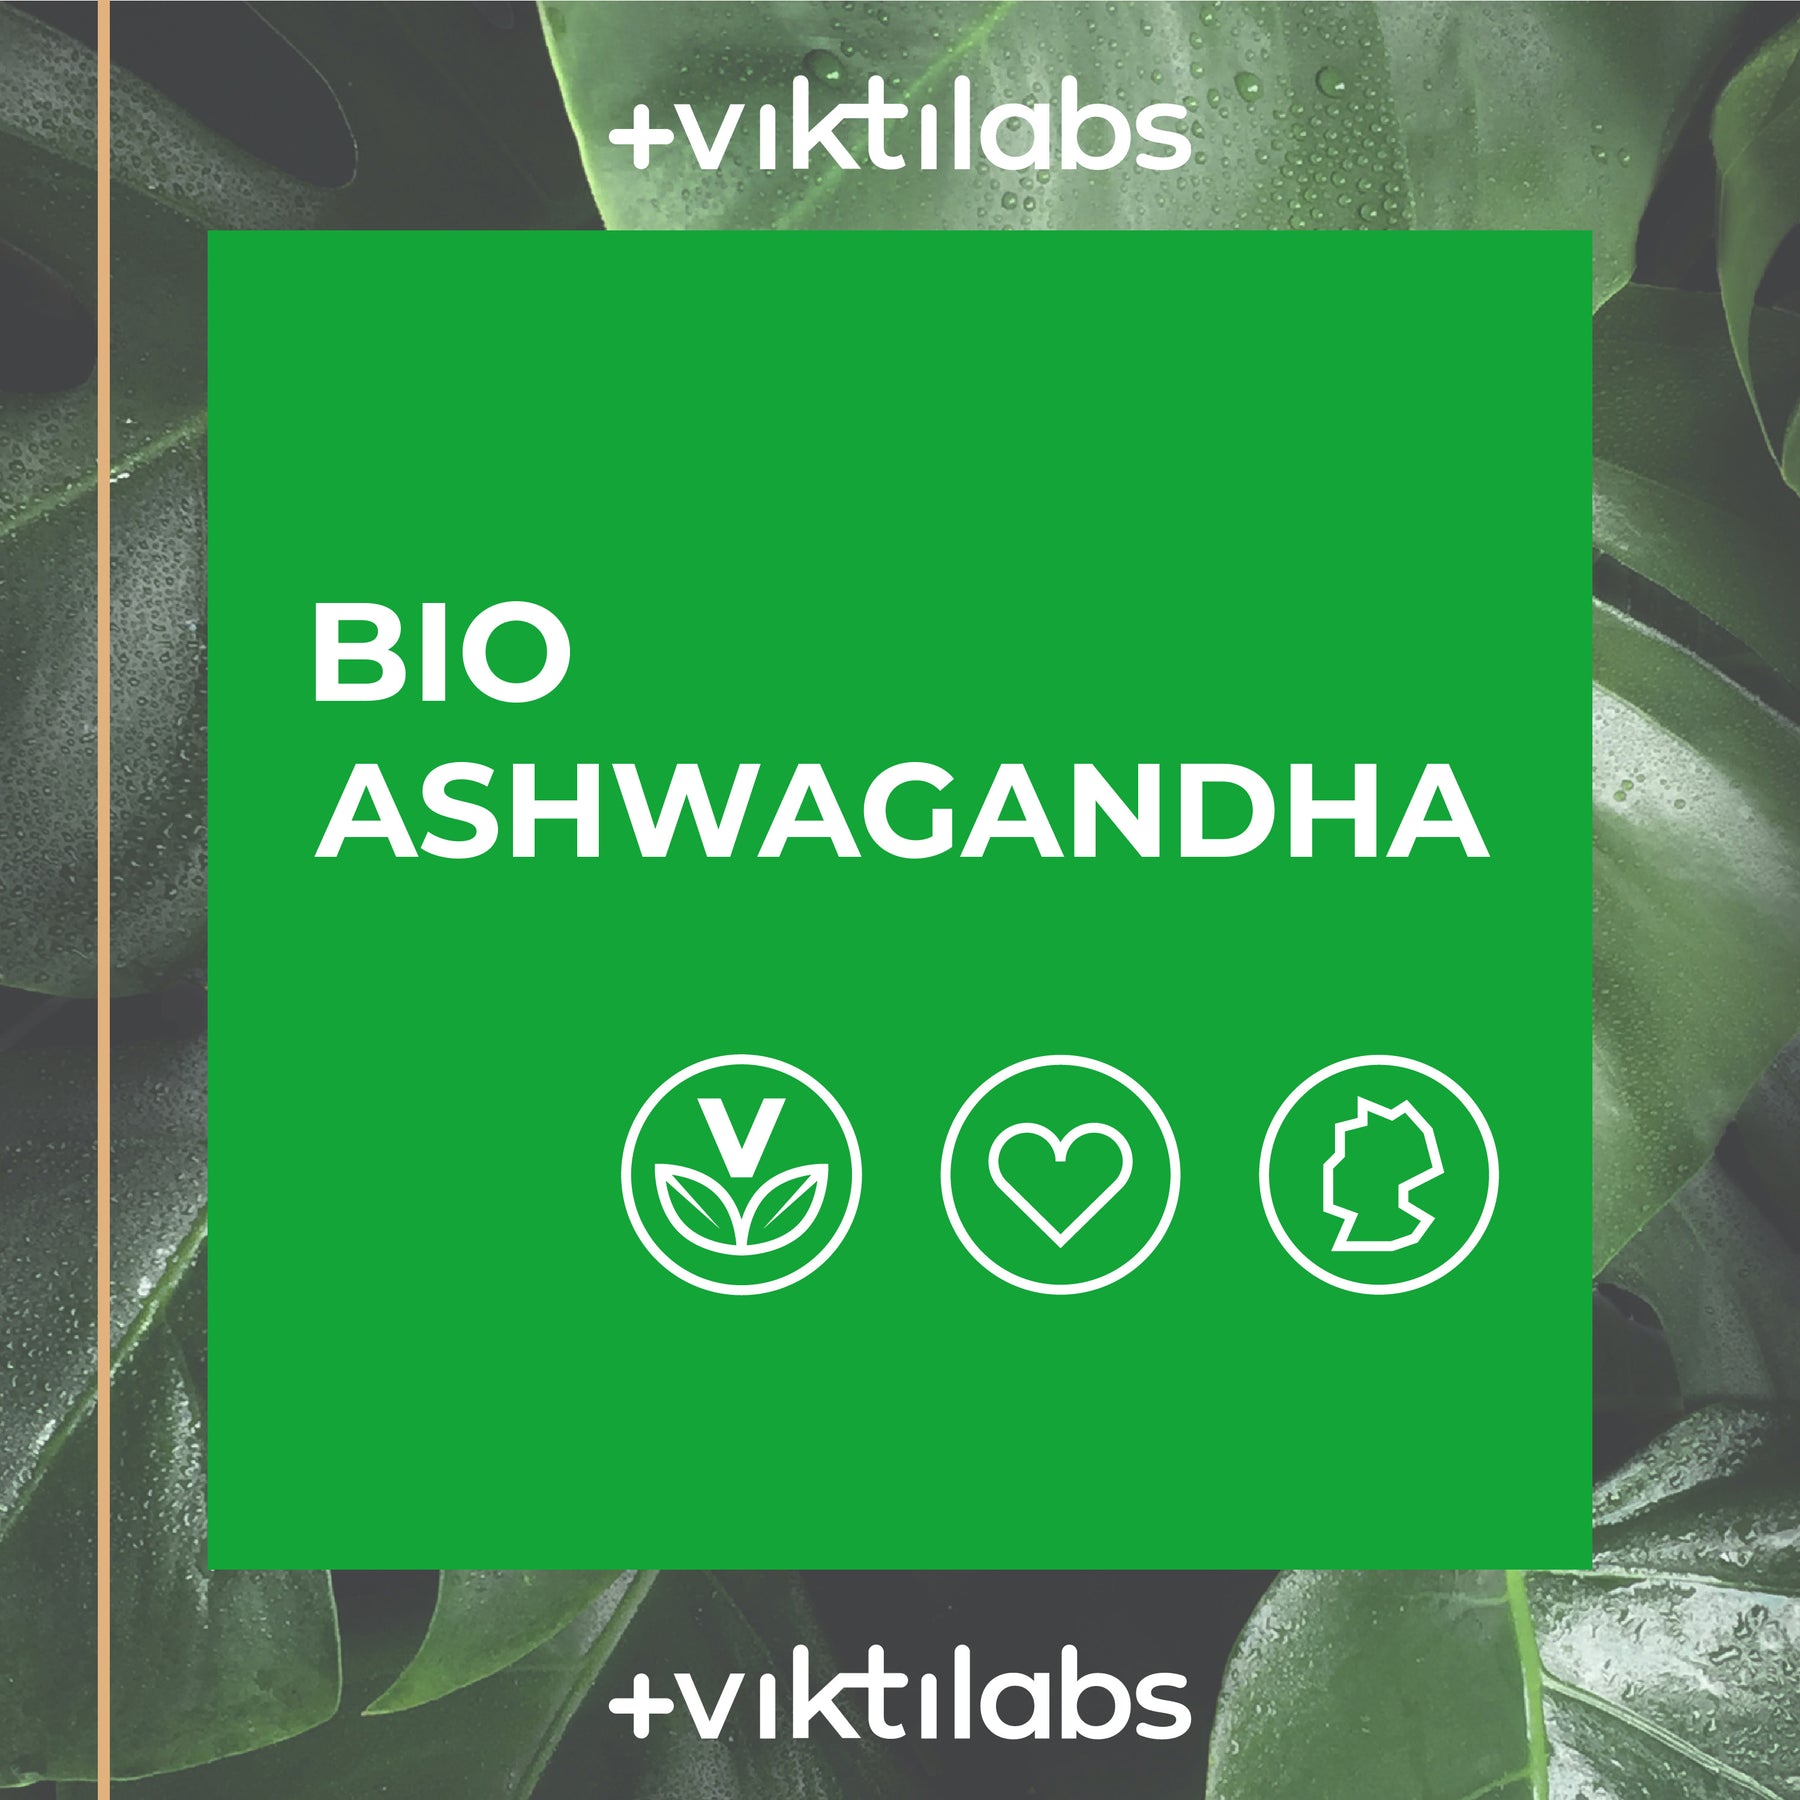 Bio Ashwagandha - reich an Withanoliden - 90 Kapseln